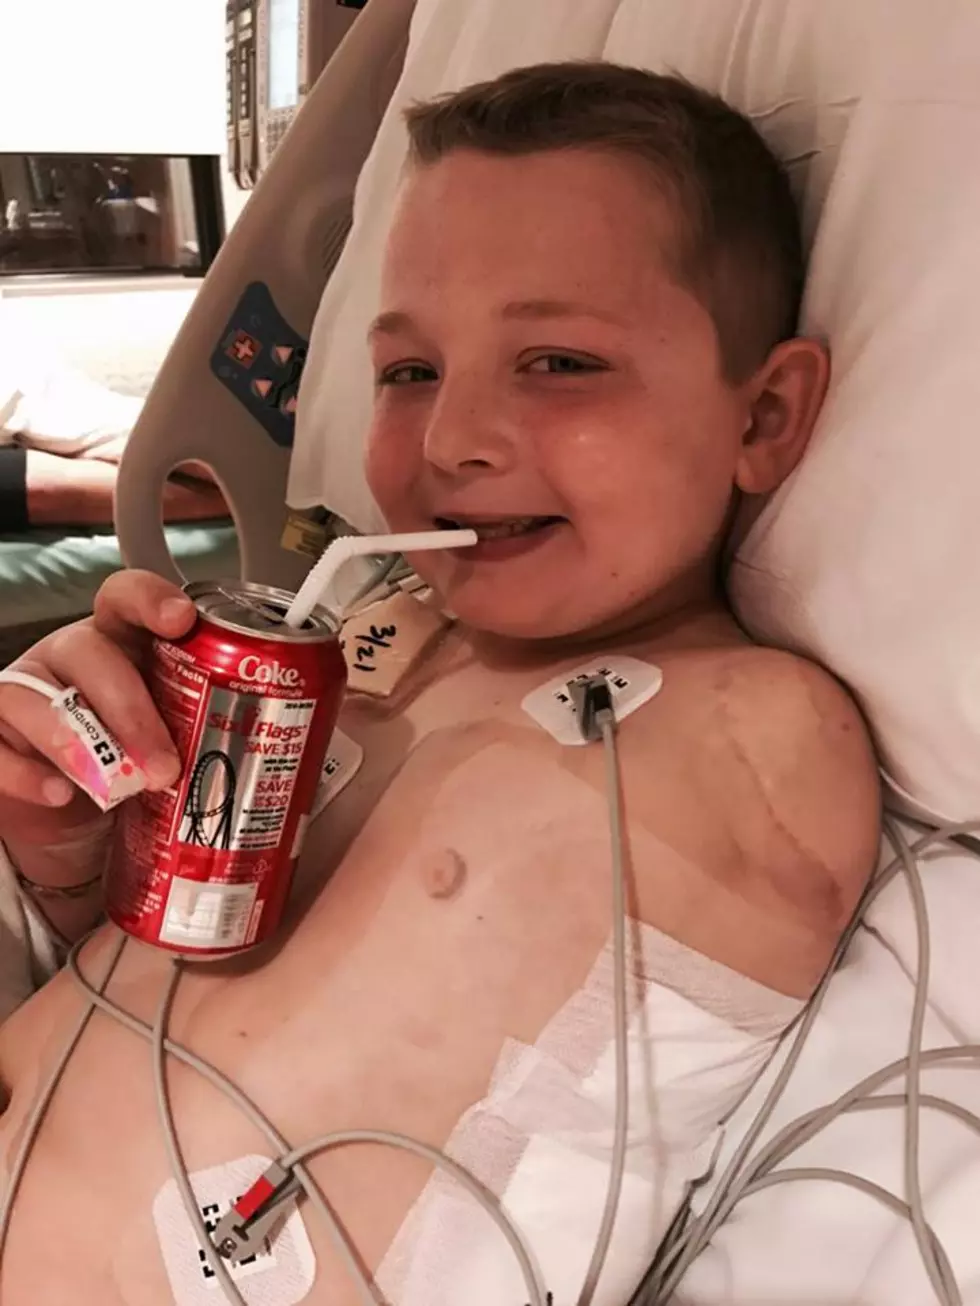 East Texas Boy Needs Your Help Battling Cancer